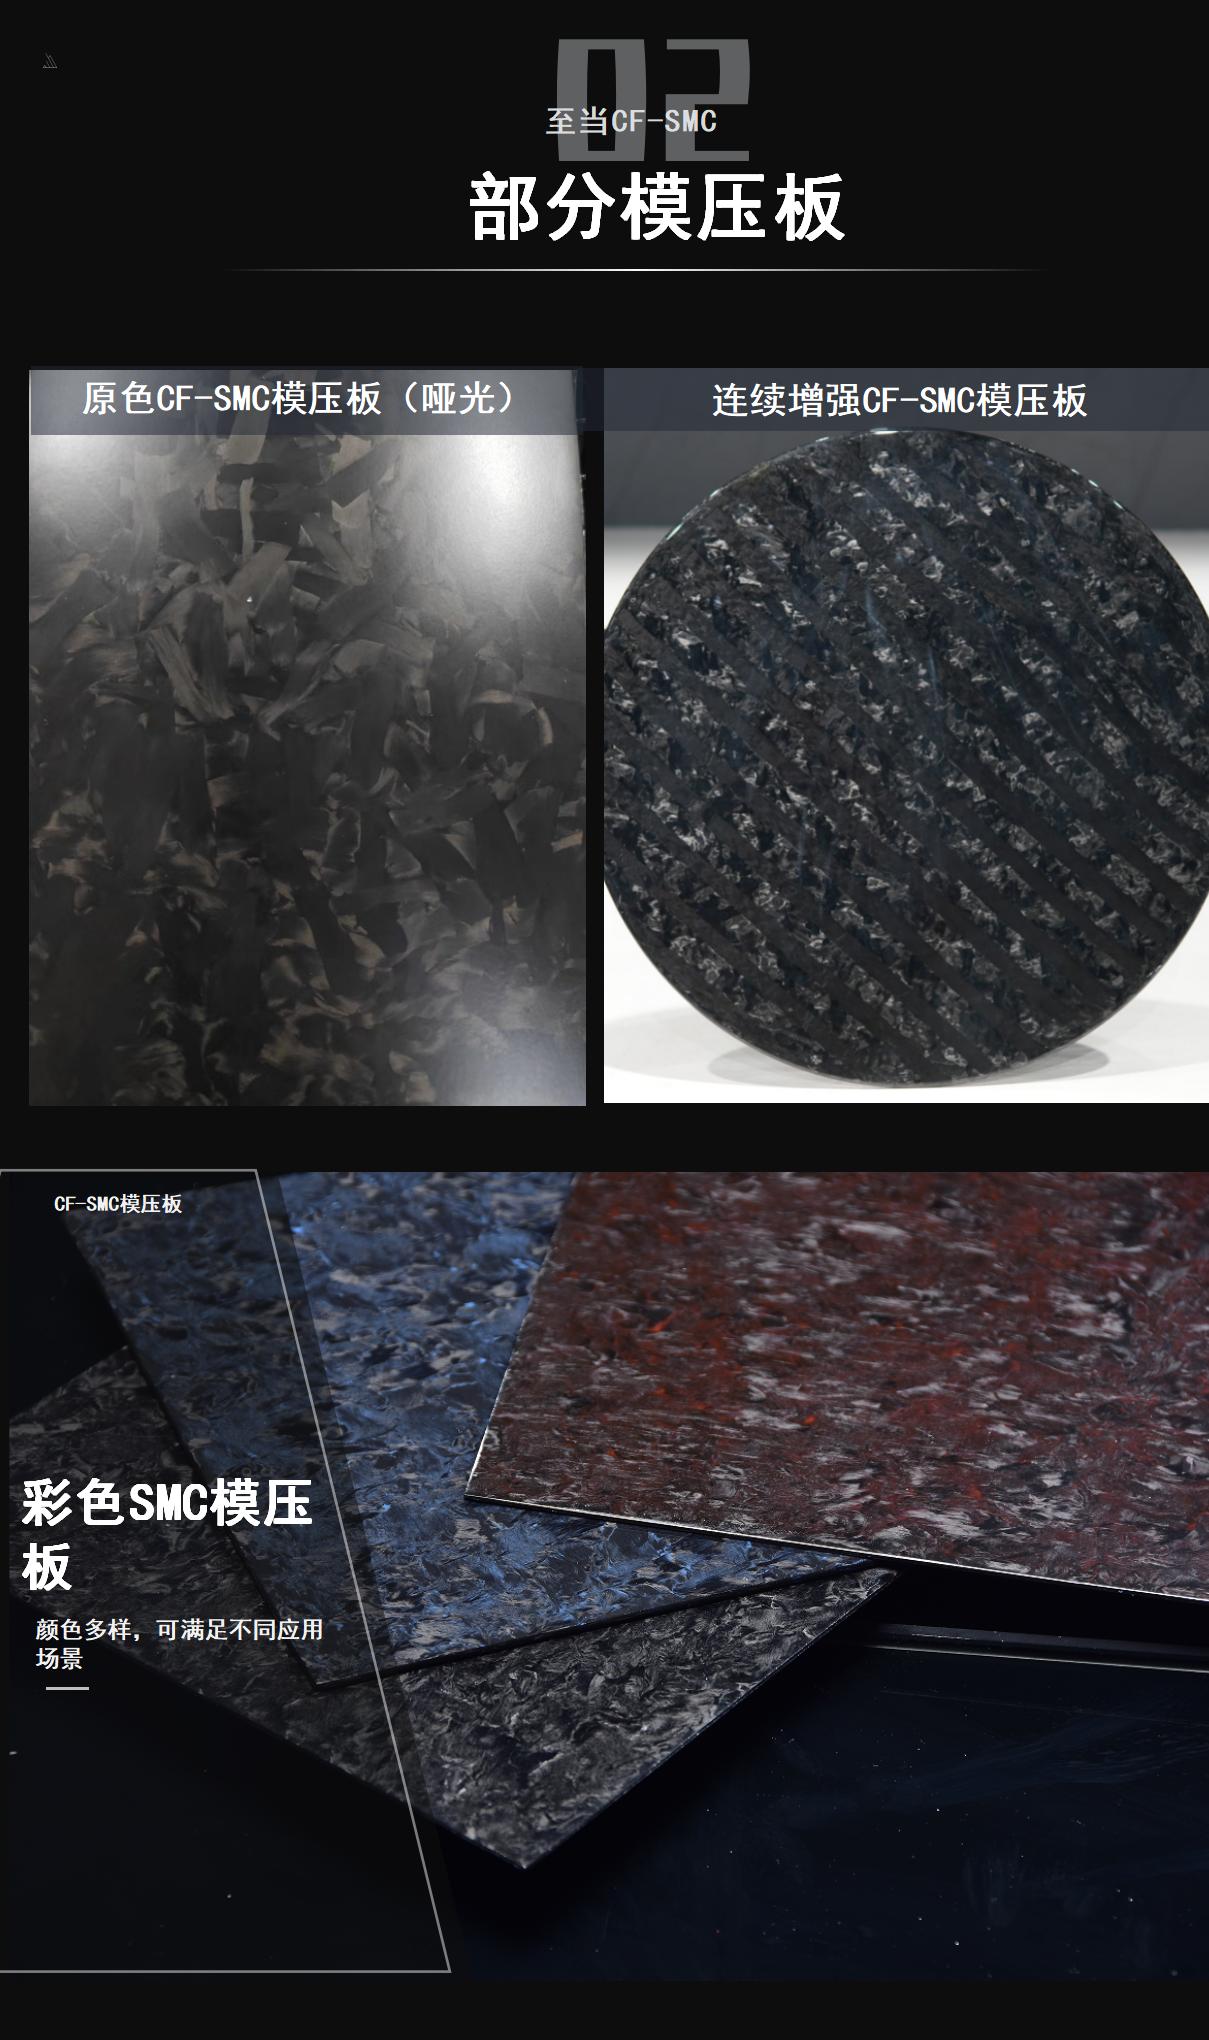 Manufacturer of forged textured carbon fiber SMC sheet, short cut carbon fiber prepreg molding material, automotive modification